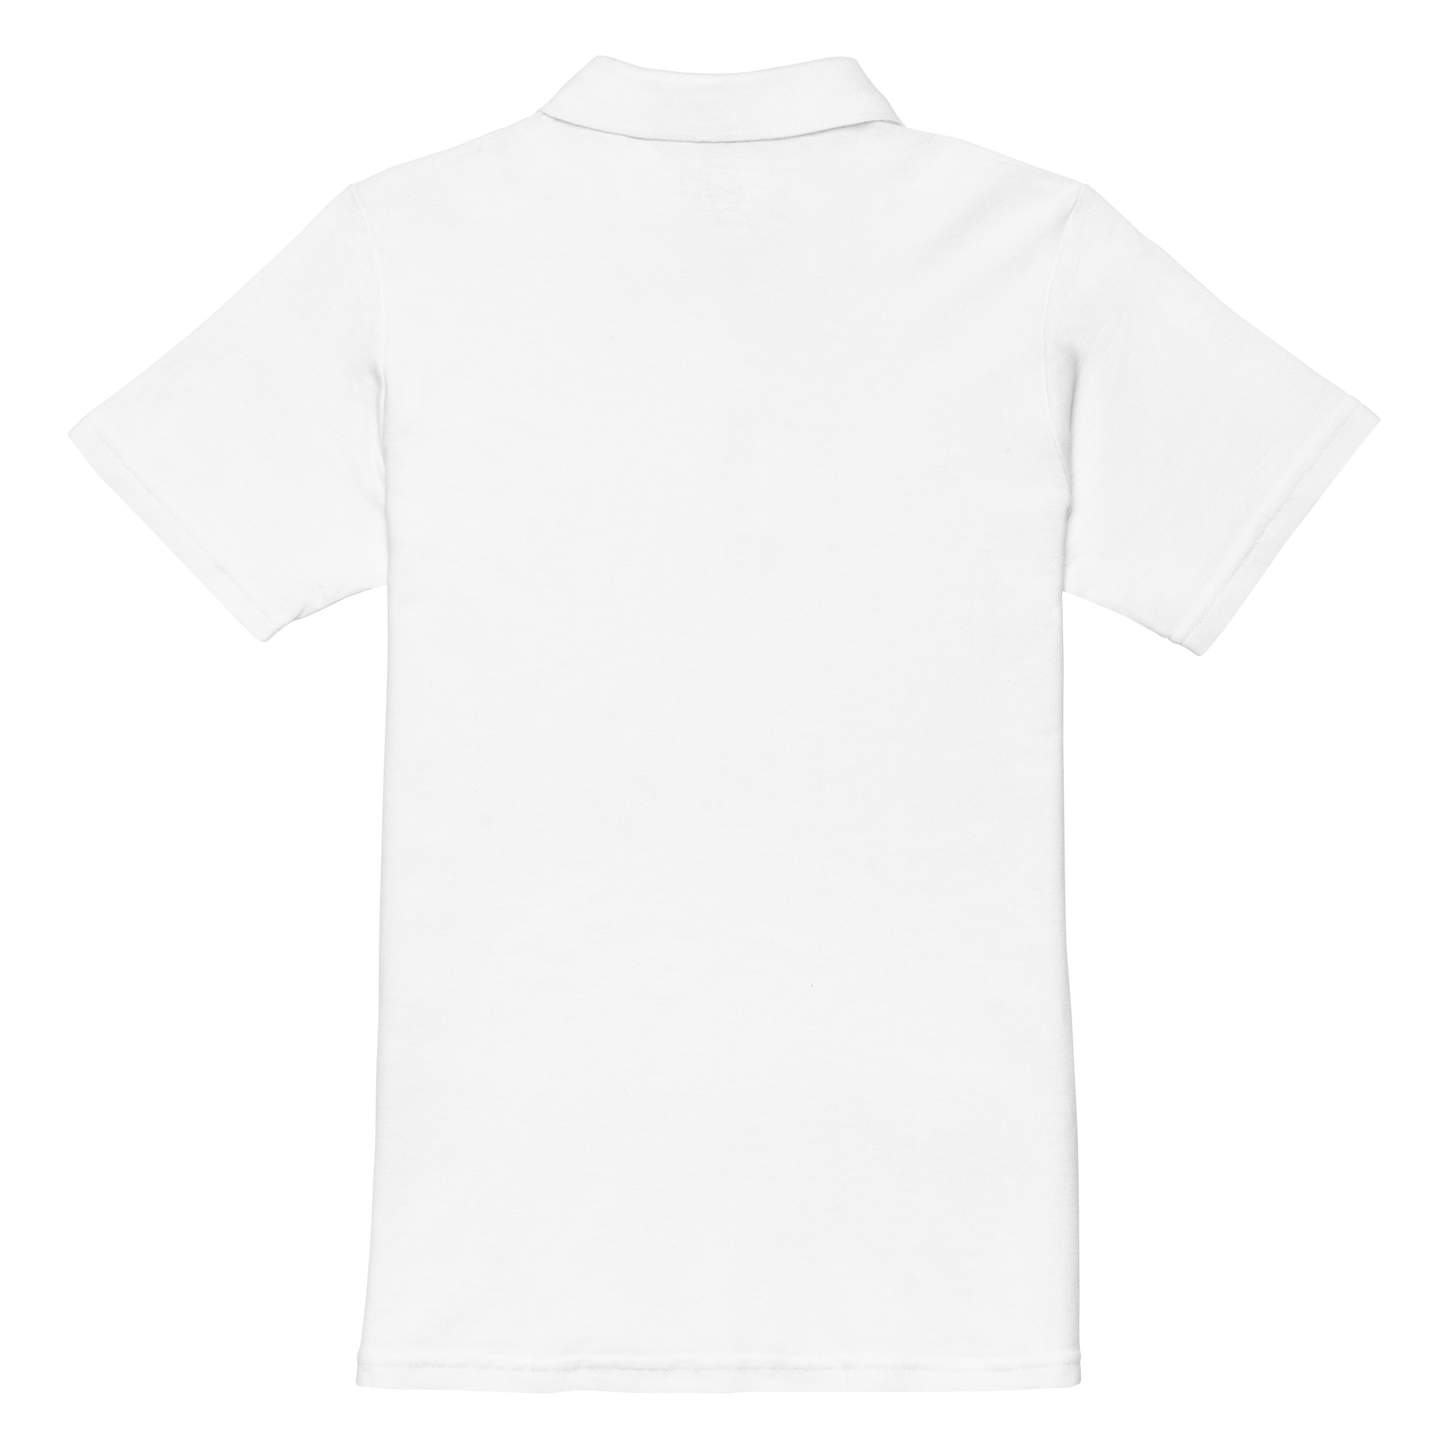 Freename - Woman's white polo shirt